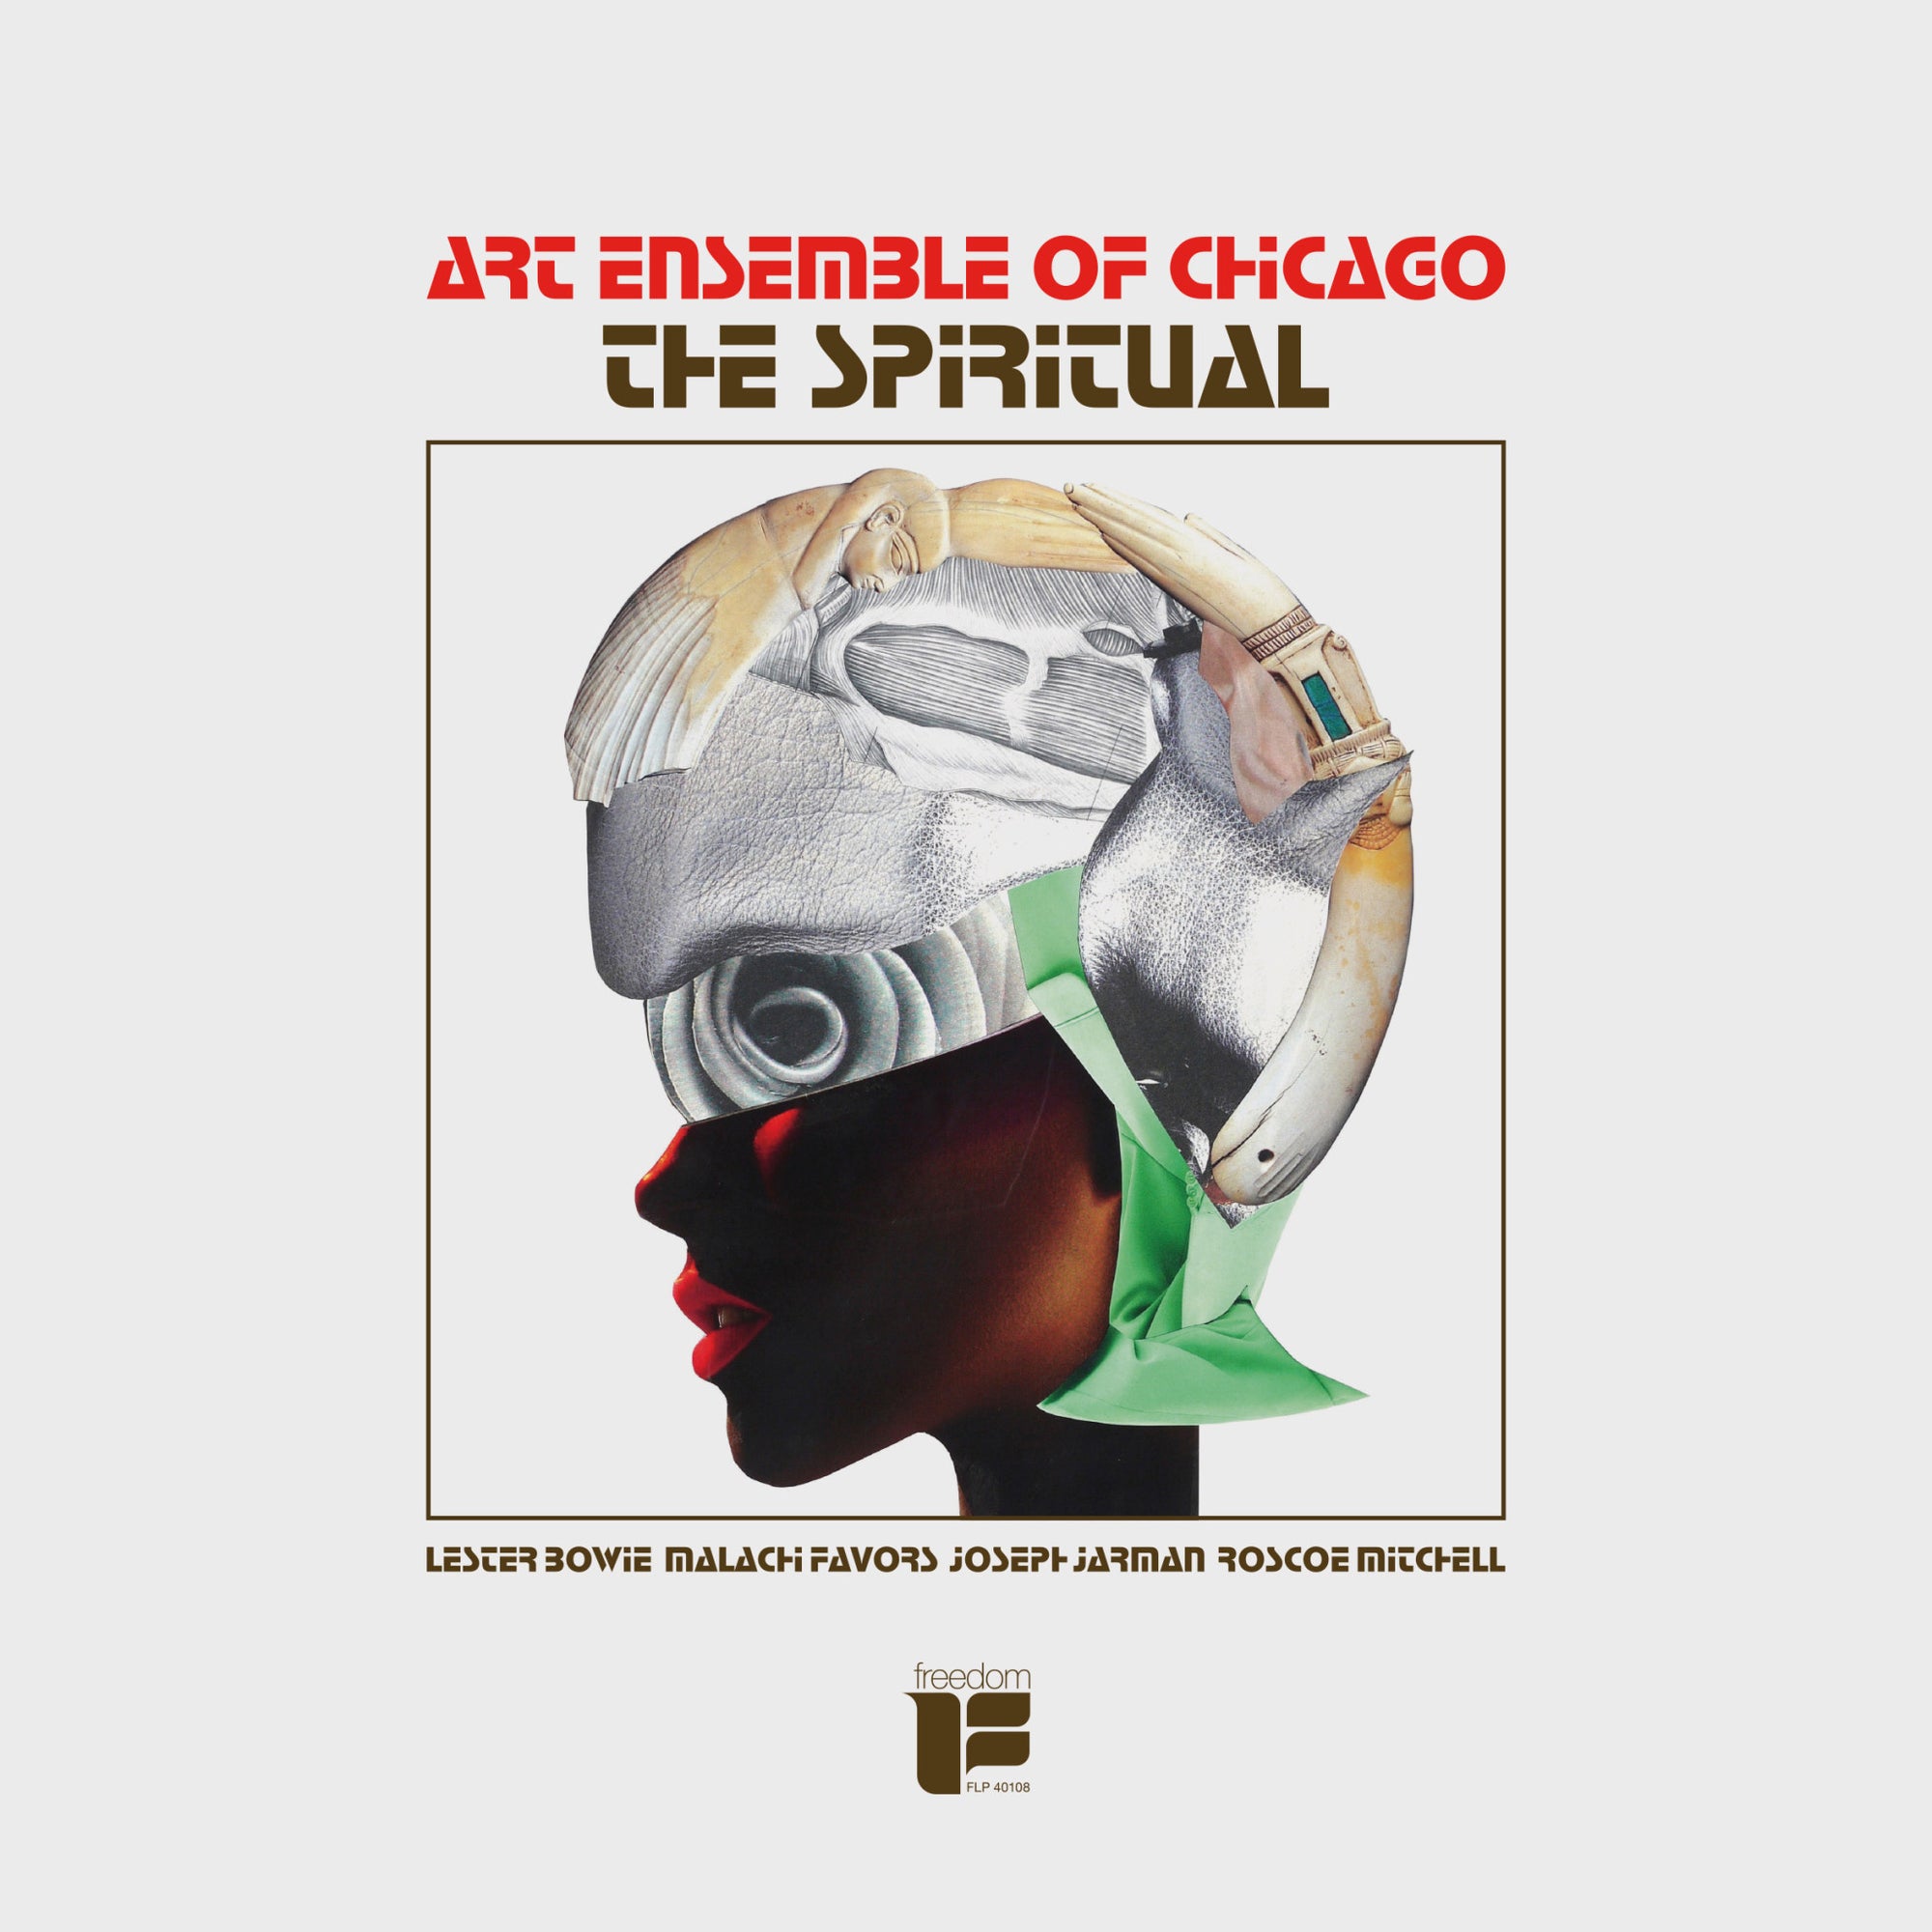 Art Ensemble of Chicago - the Spiritual (Vinyl LP)